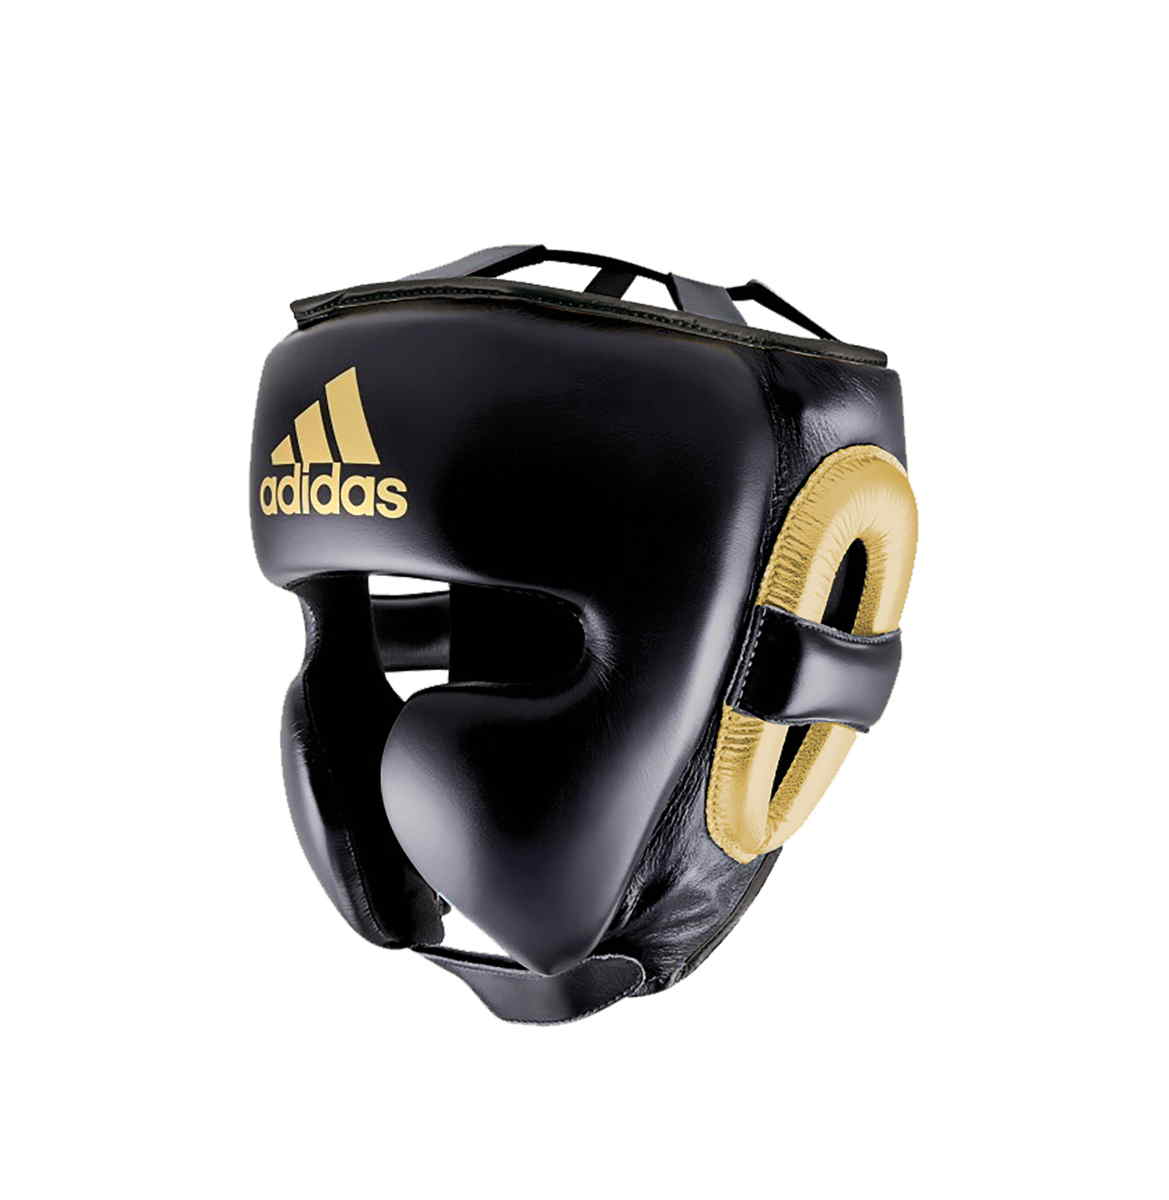 Pro schwarz|gold adidas Kopfschutz adistar